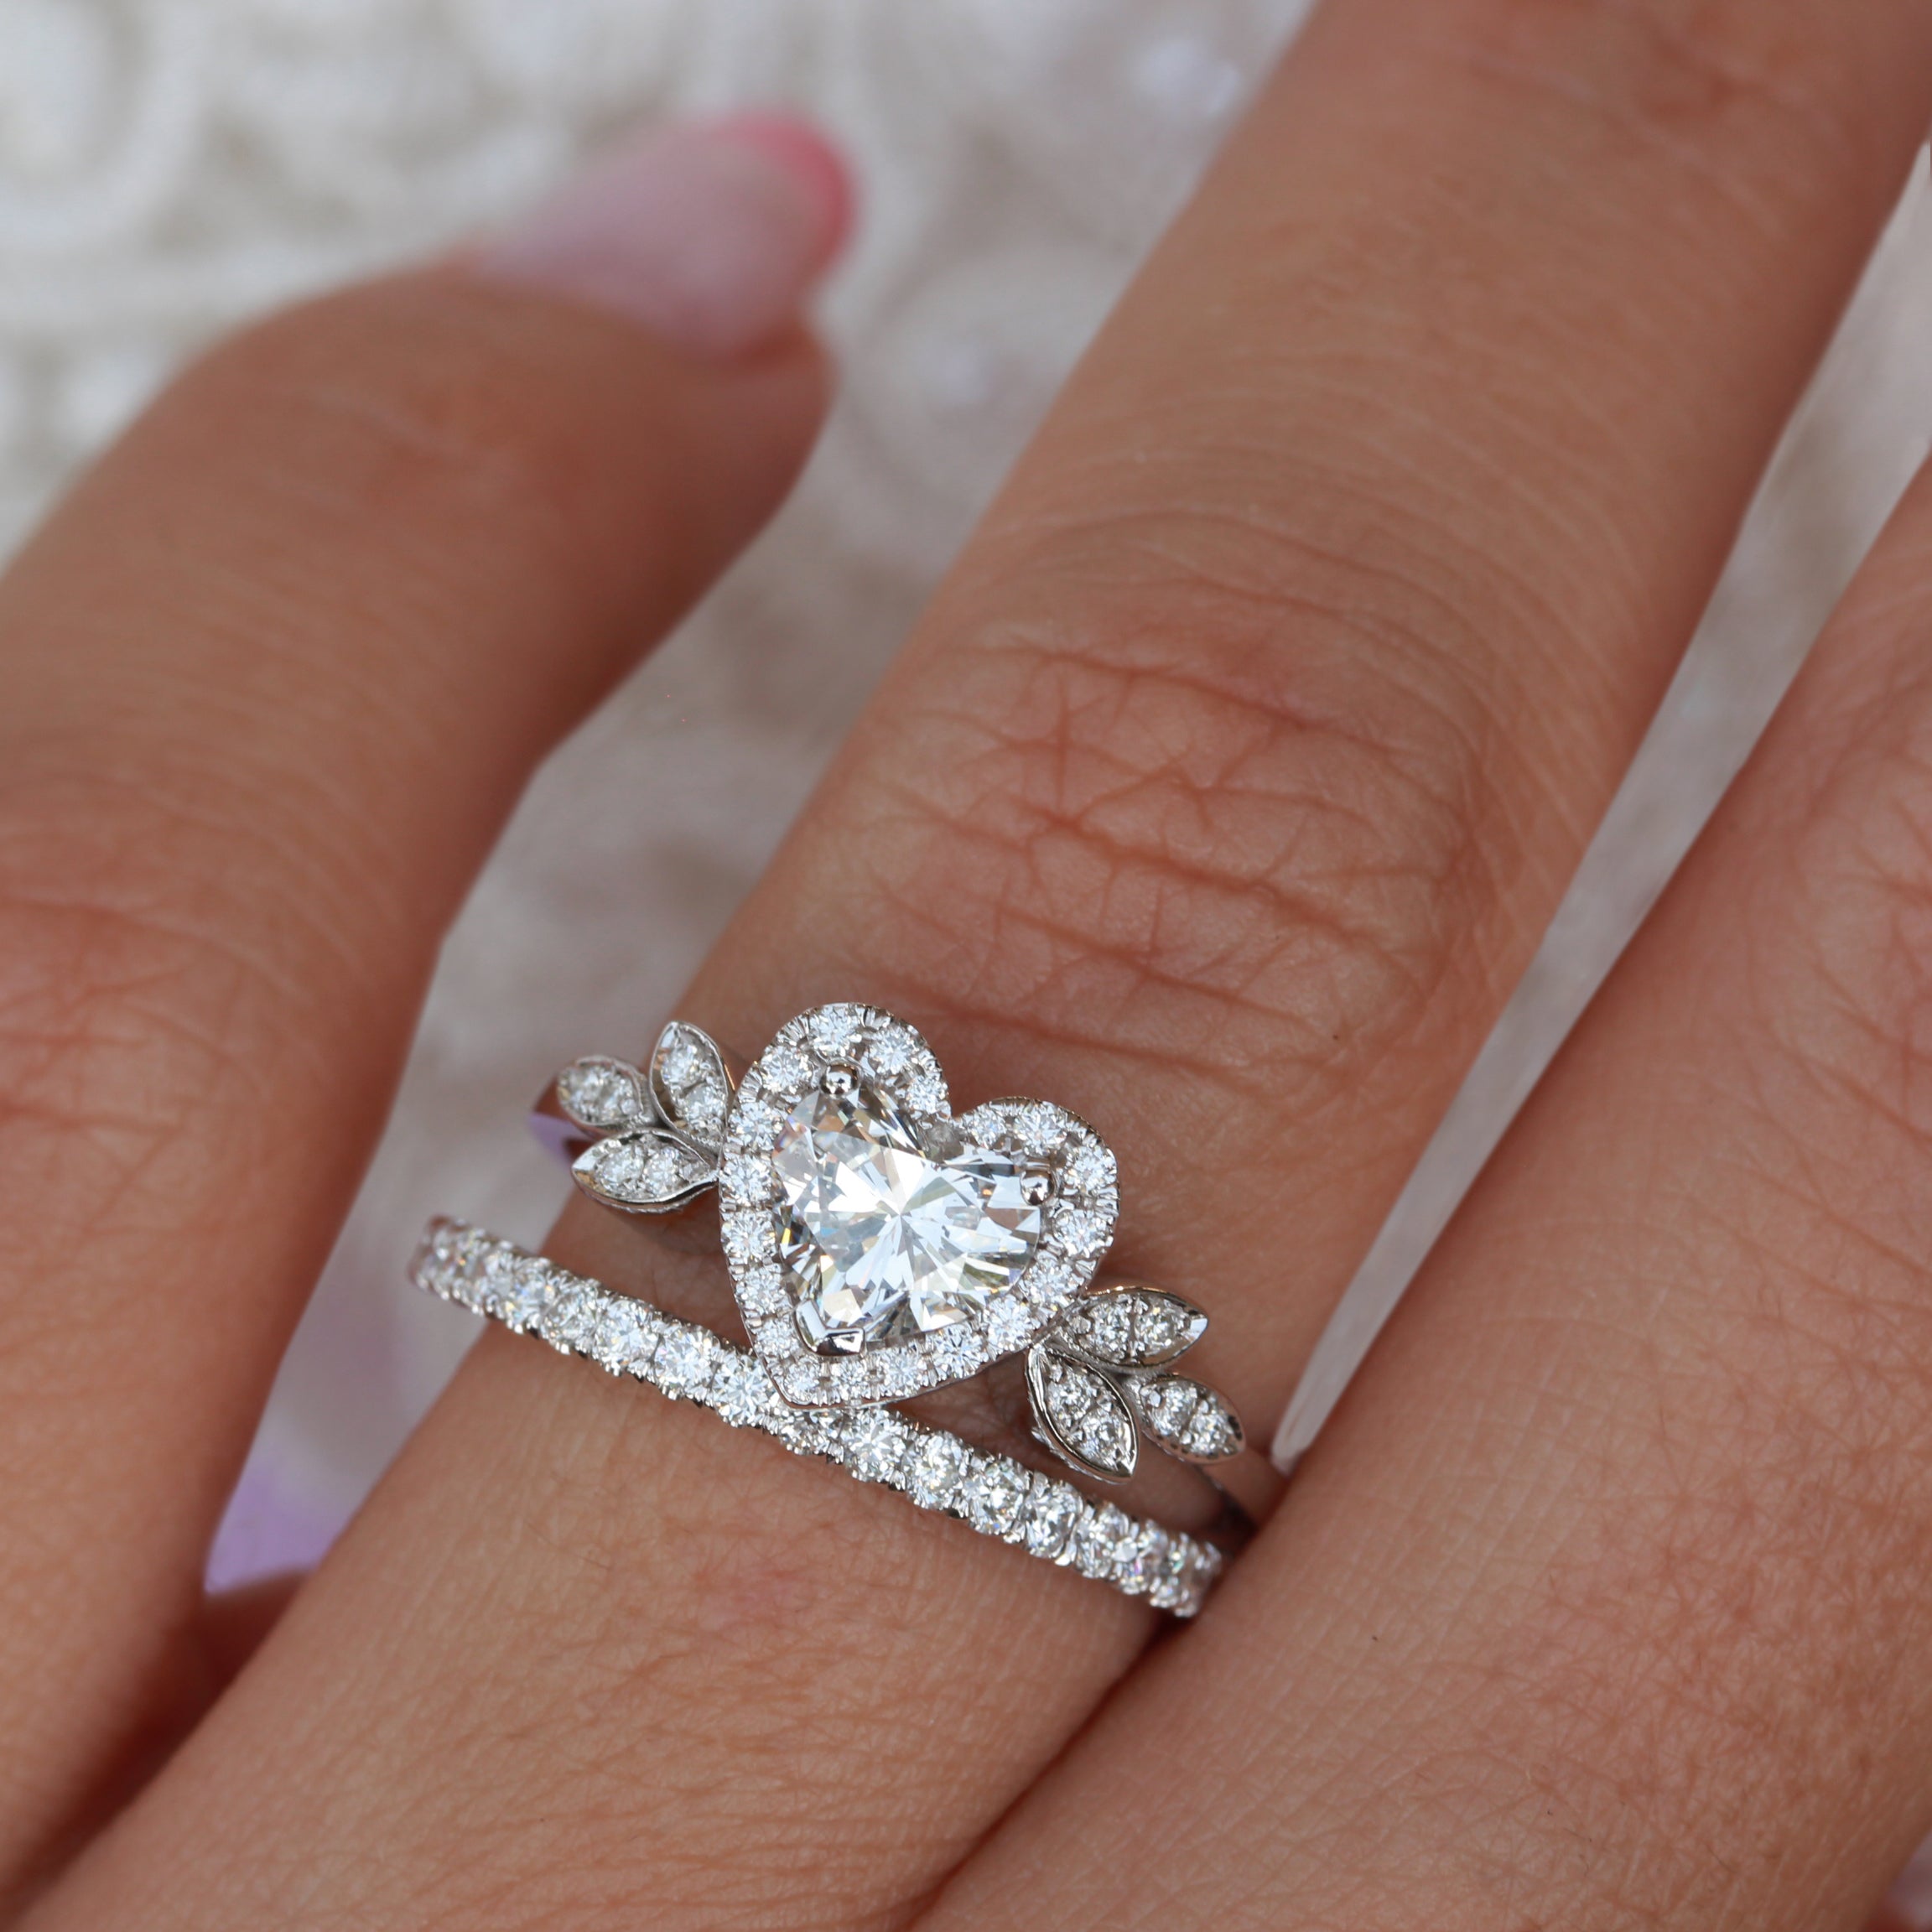 Lovey-Dovey Heart Shaped Diamond Ring Designs